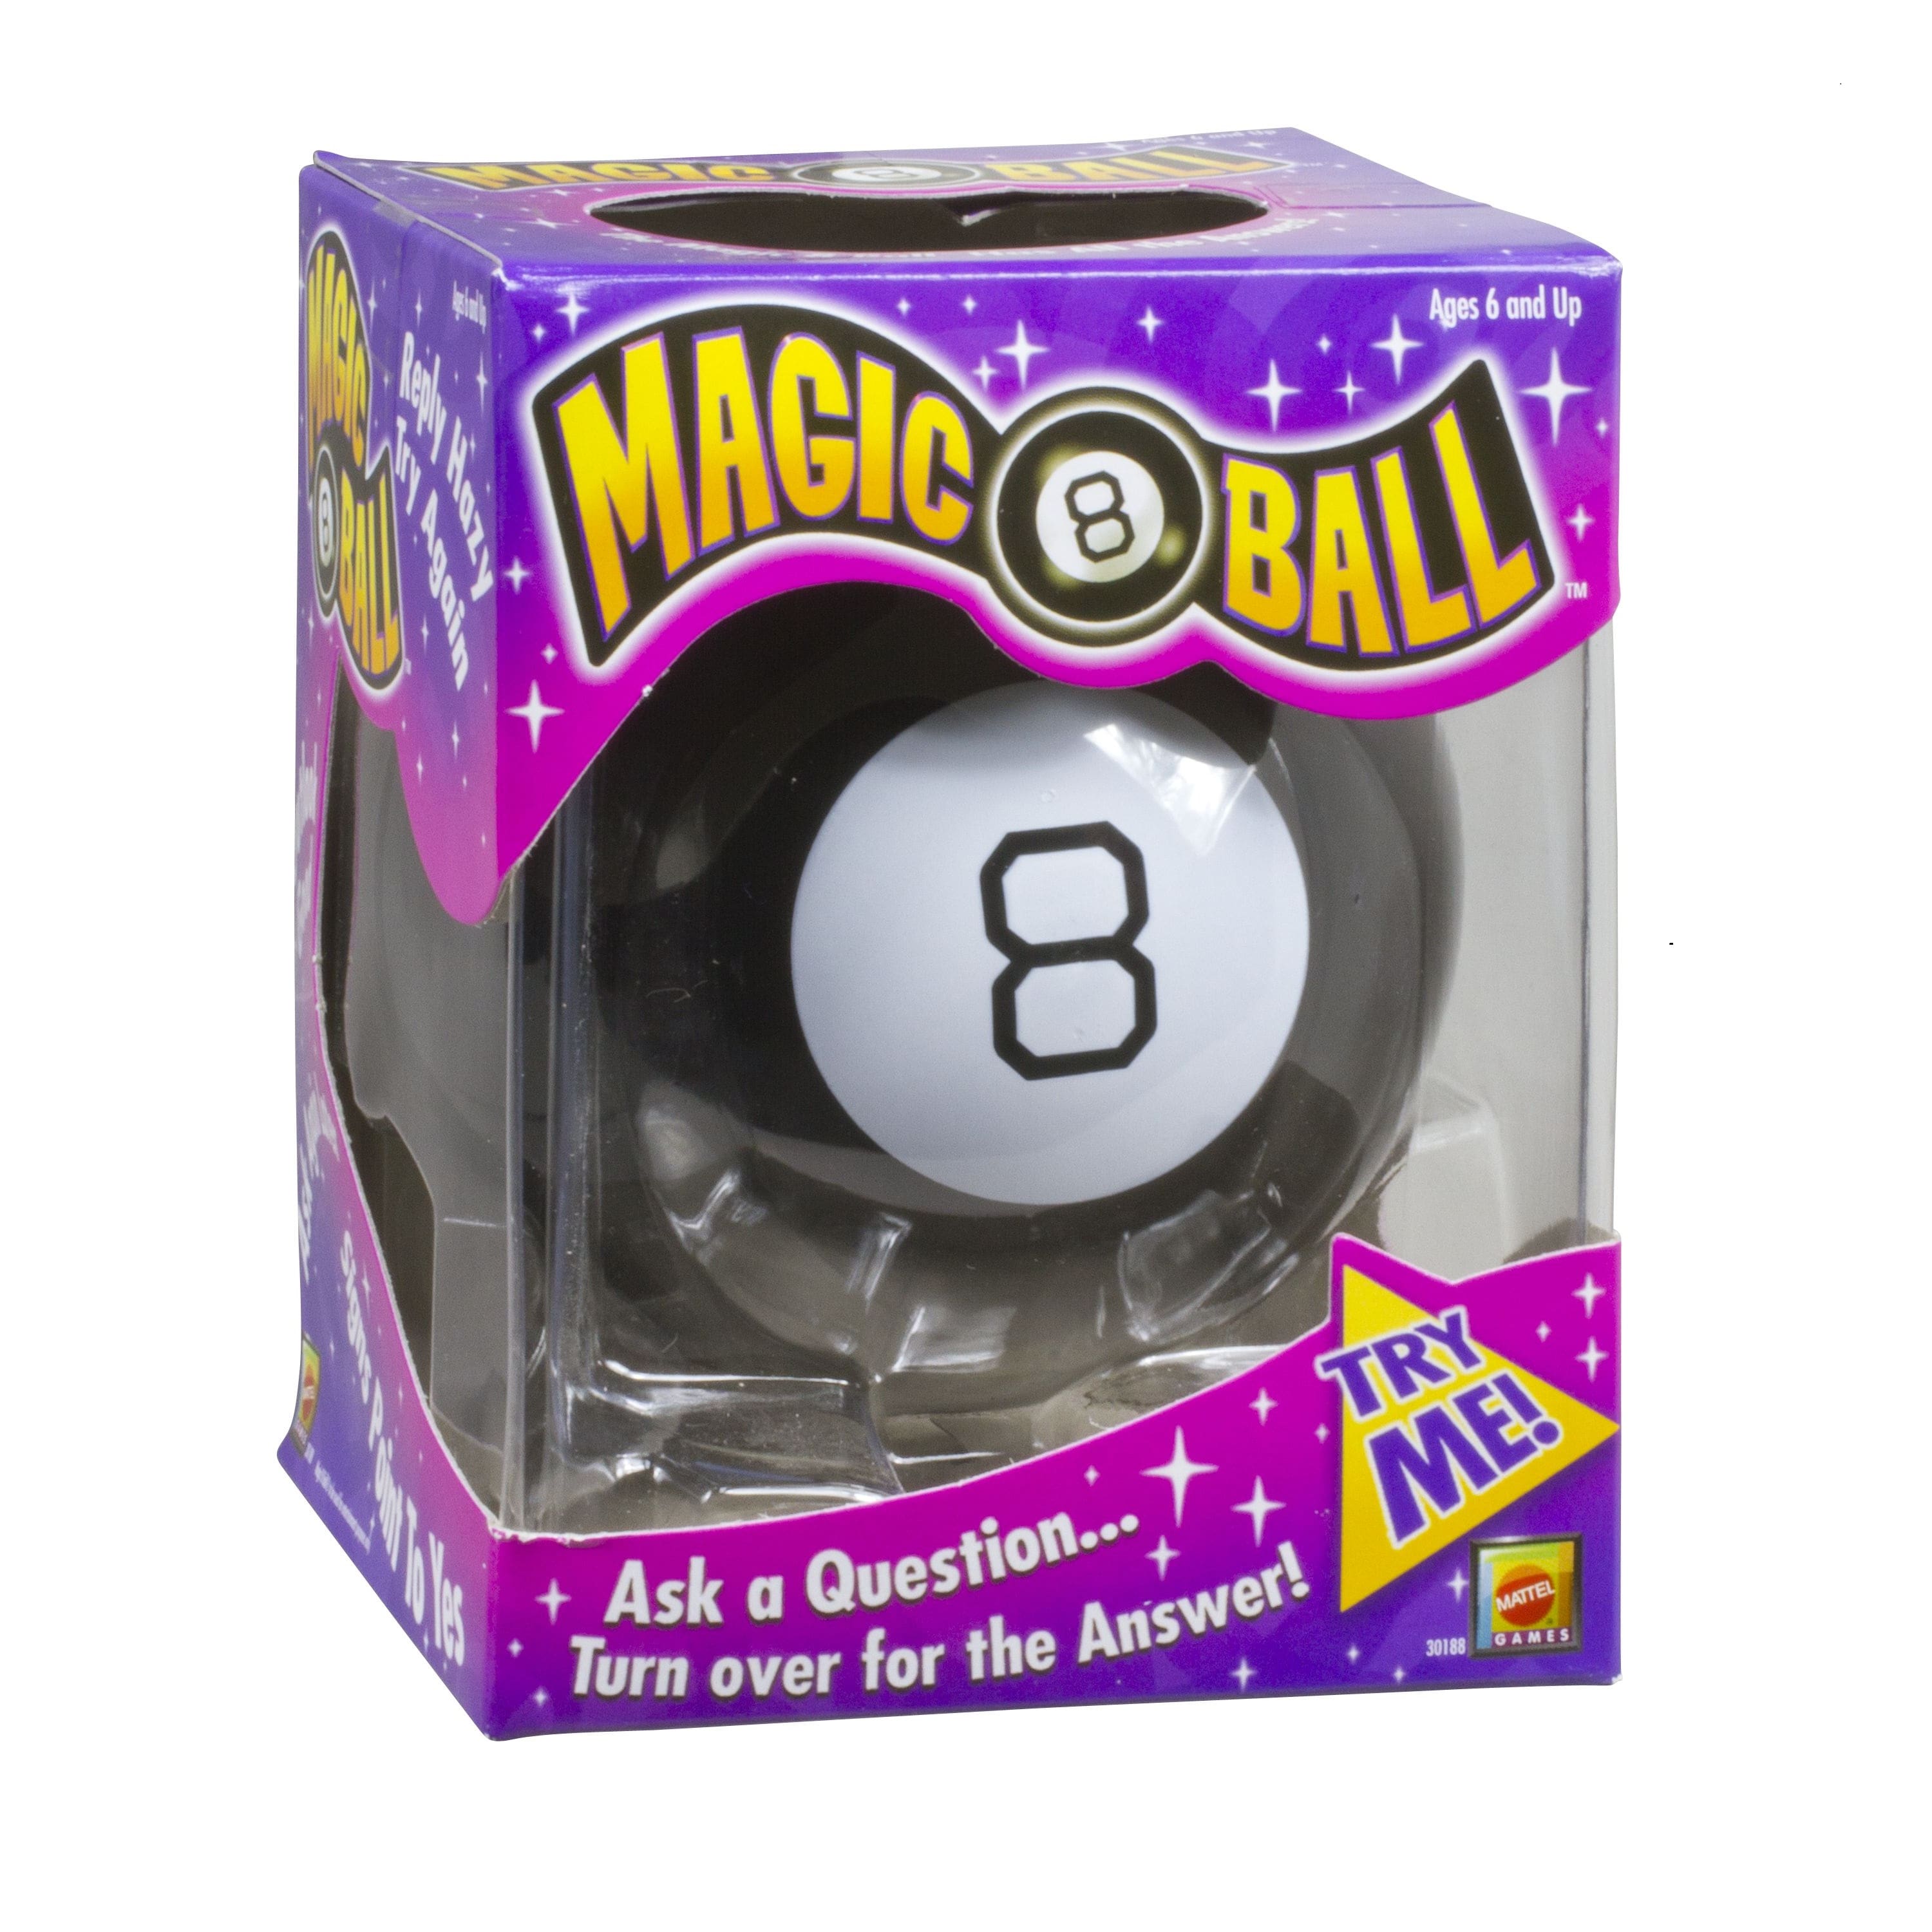 Shop for the Mattel® Magic 8 Ball® at 